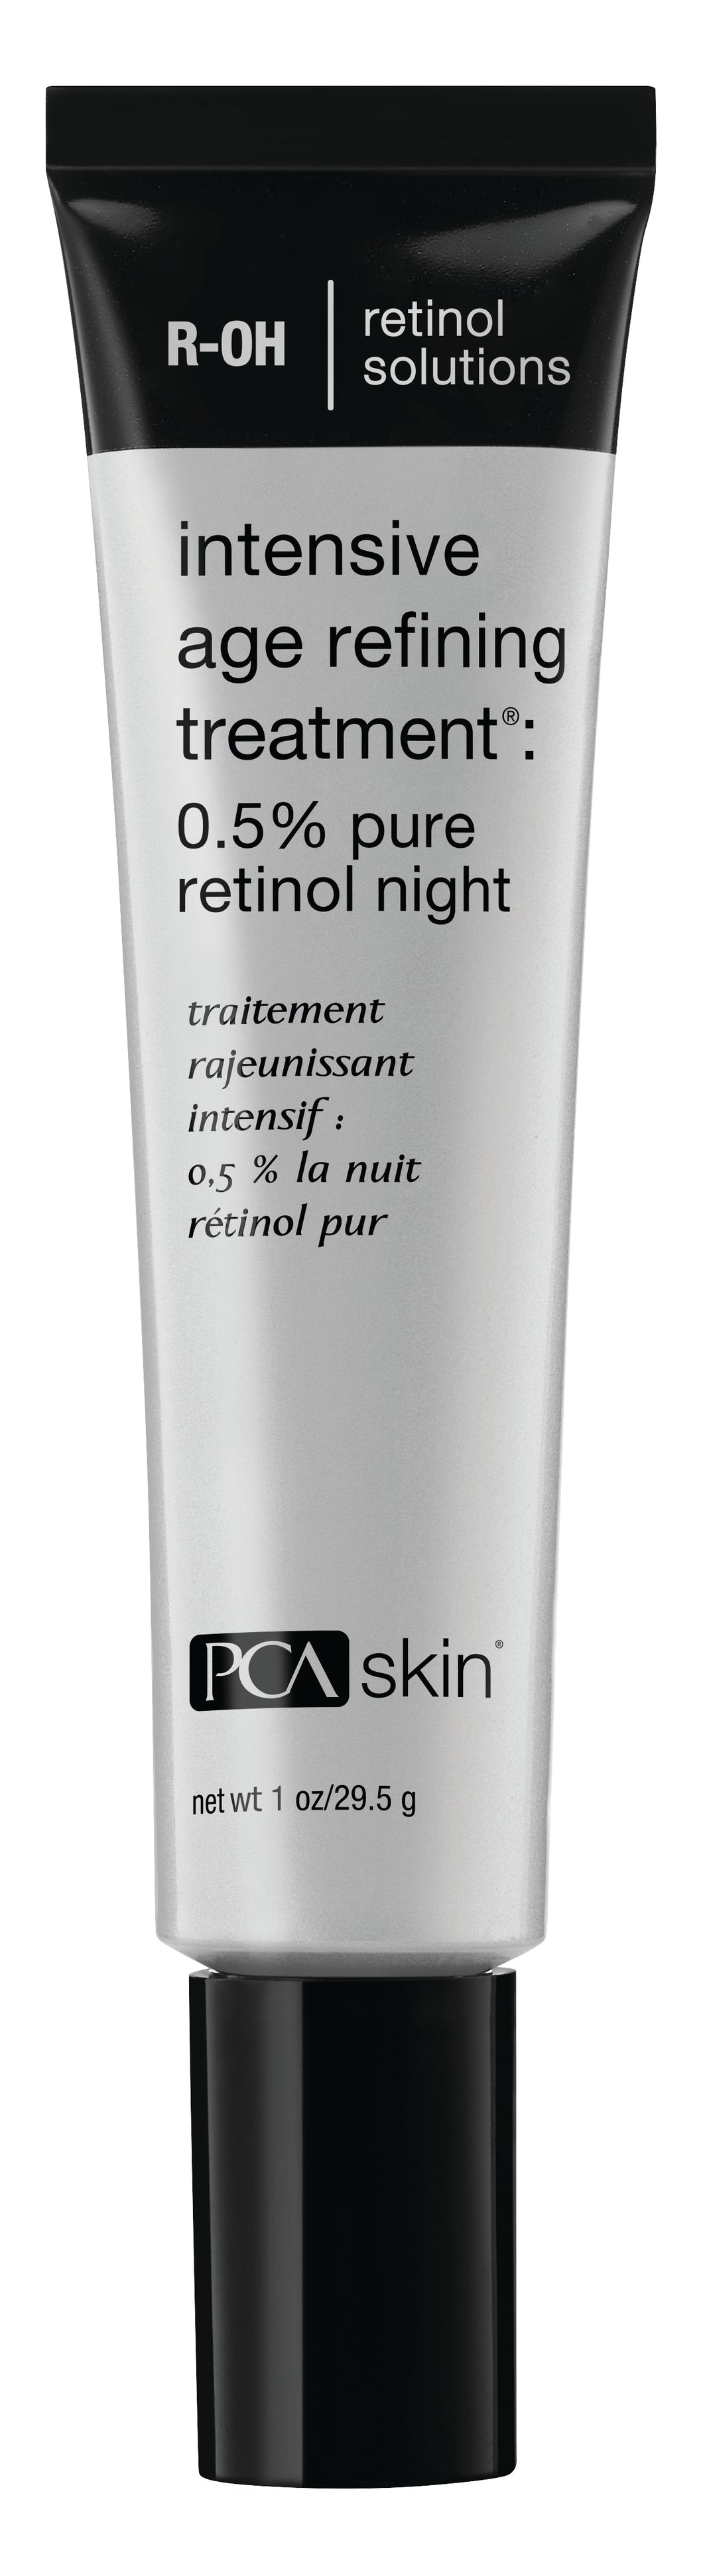 Intensive Age Refining Treatment®:  0.5% pure retinol